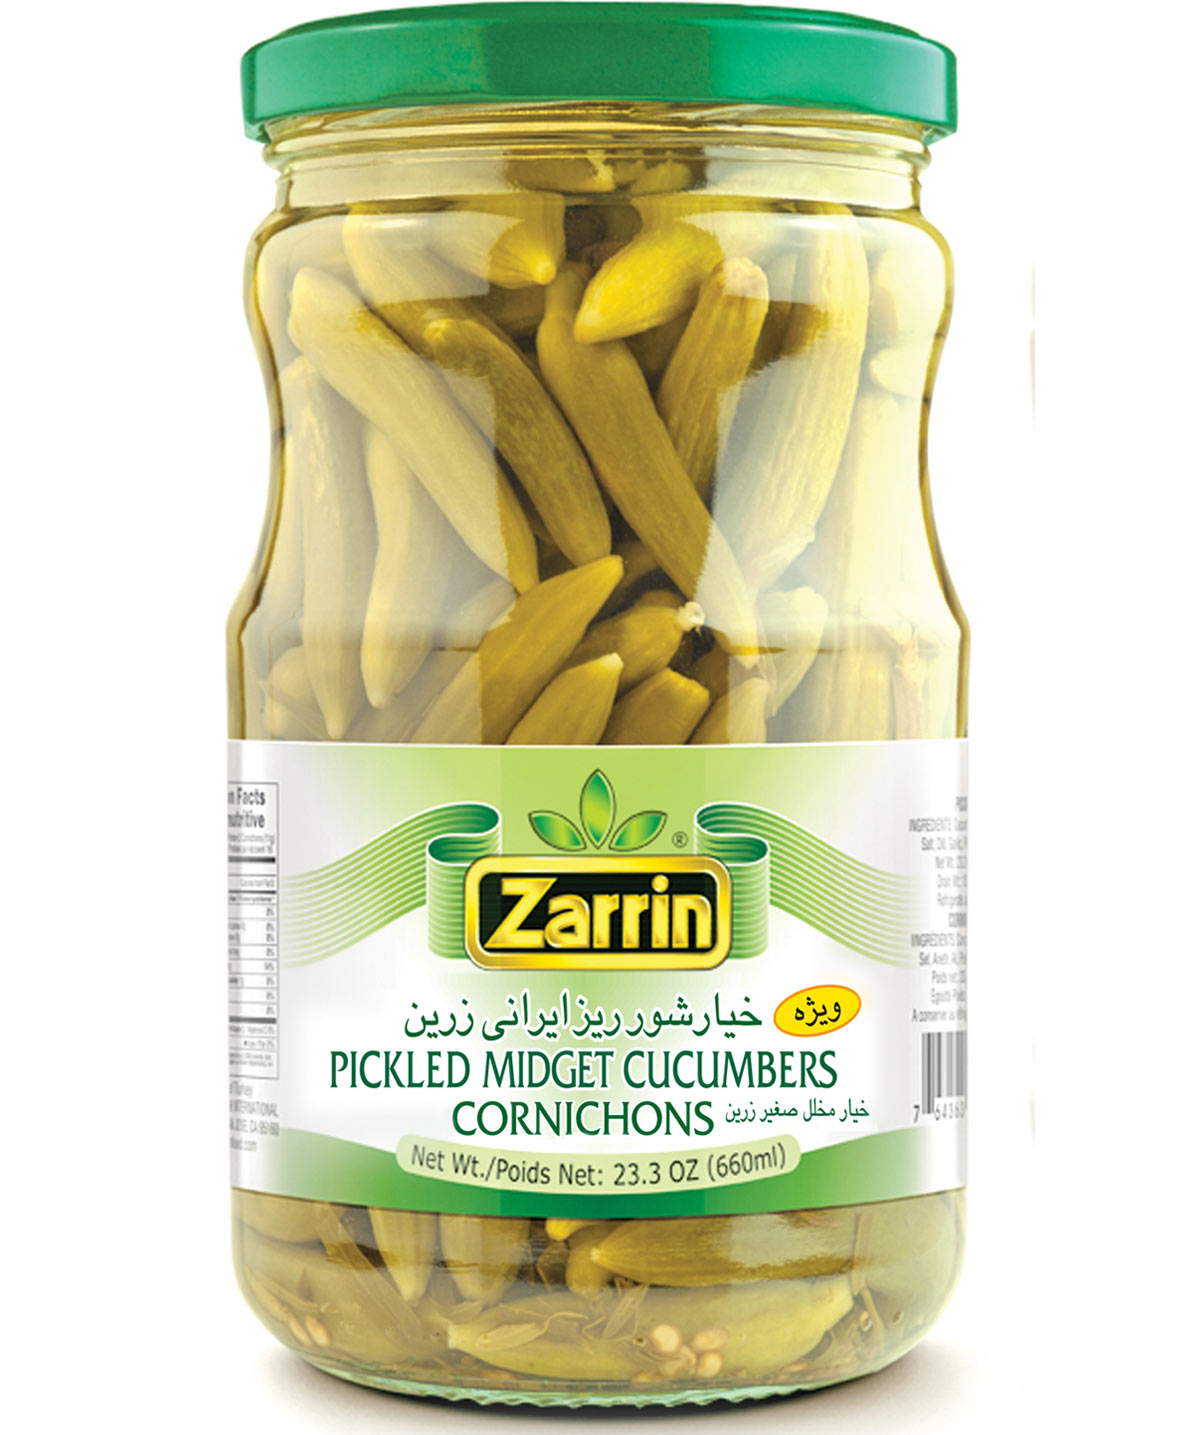 Zarrin Pickled Midget Cucumbers